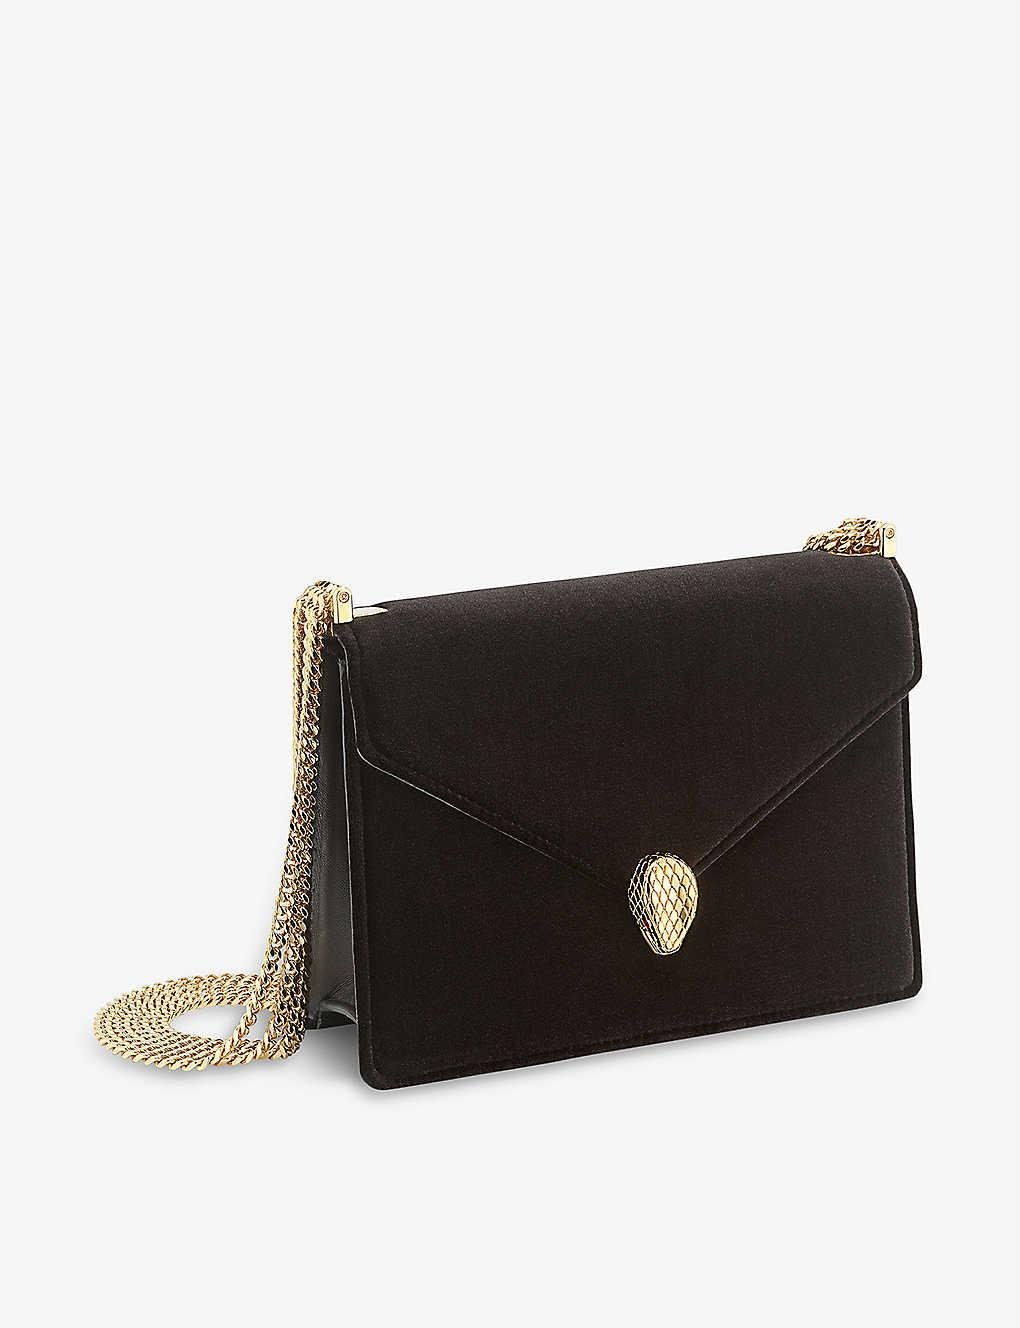 Bvlgari - Authenticated Serpenti Handbag - Leather Black Plain for Women, Never Worn